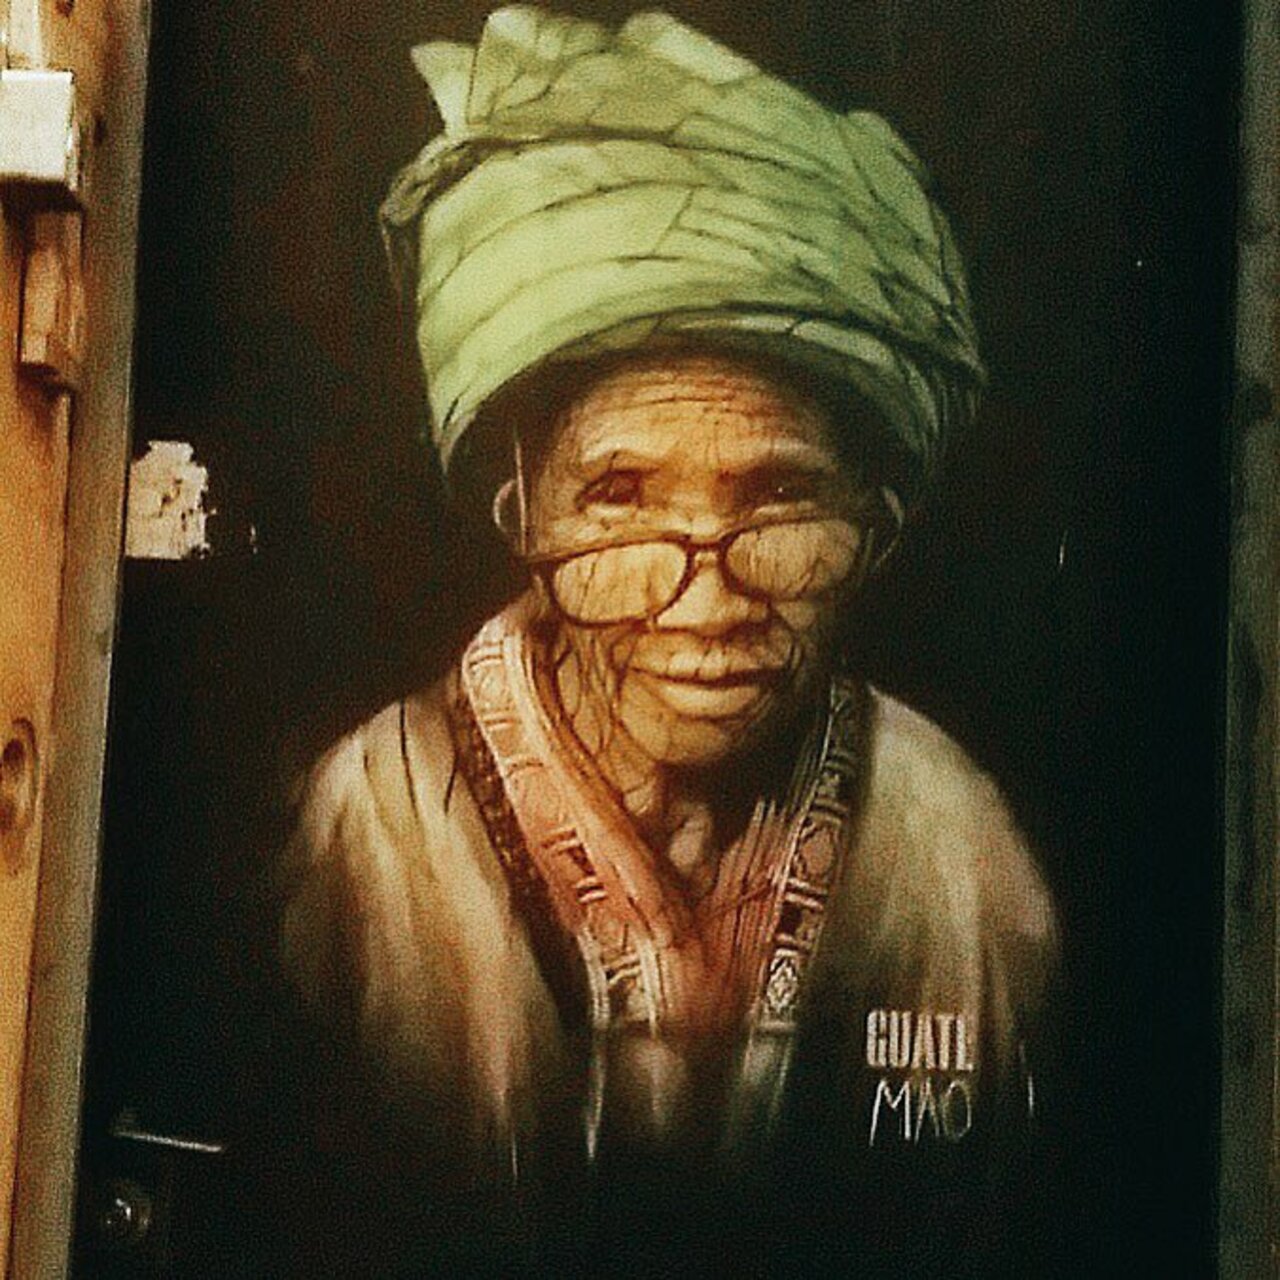 Old woman by #guatemao #streetart #graffiti #streetartist #streetarteverywhere #graffiti #spray #sprayart #bombing #wall #urbanart #nirindastreet #paris https://t.co/8dC0dSOuye